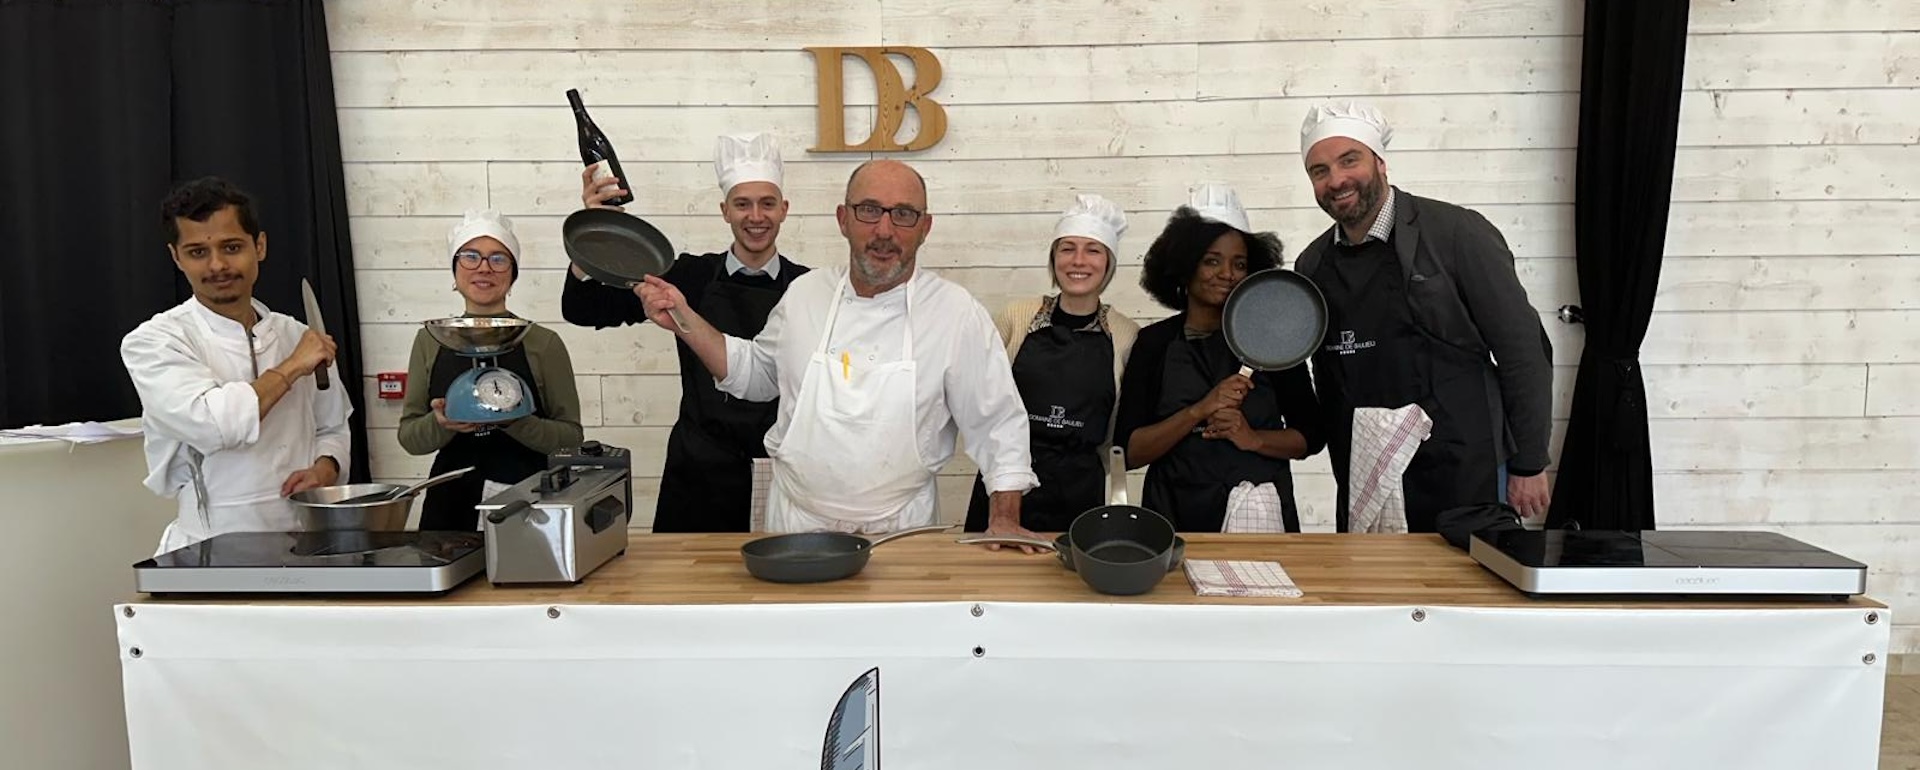 Top cooking class - Domaine de Beaulieu